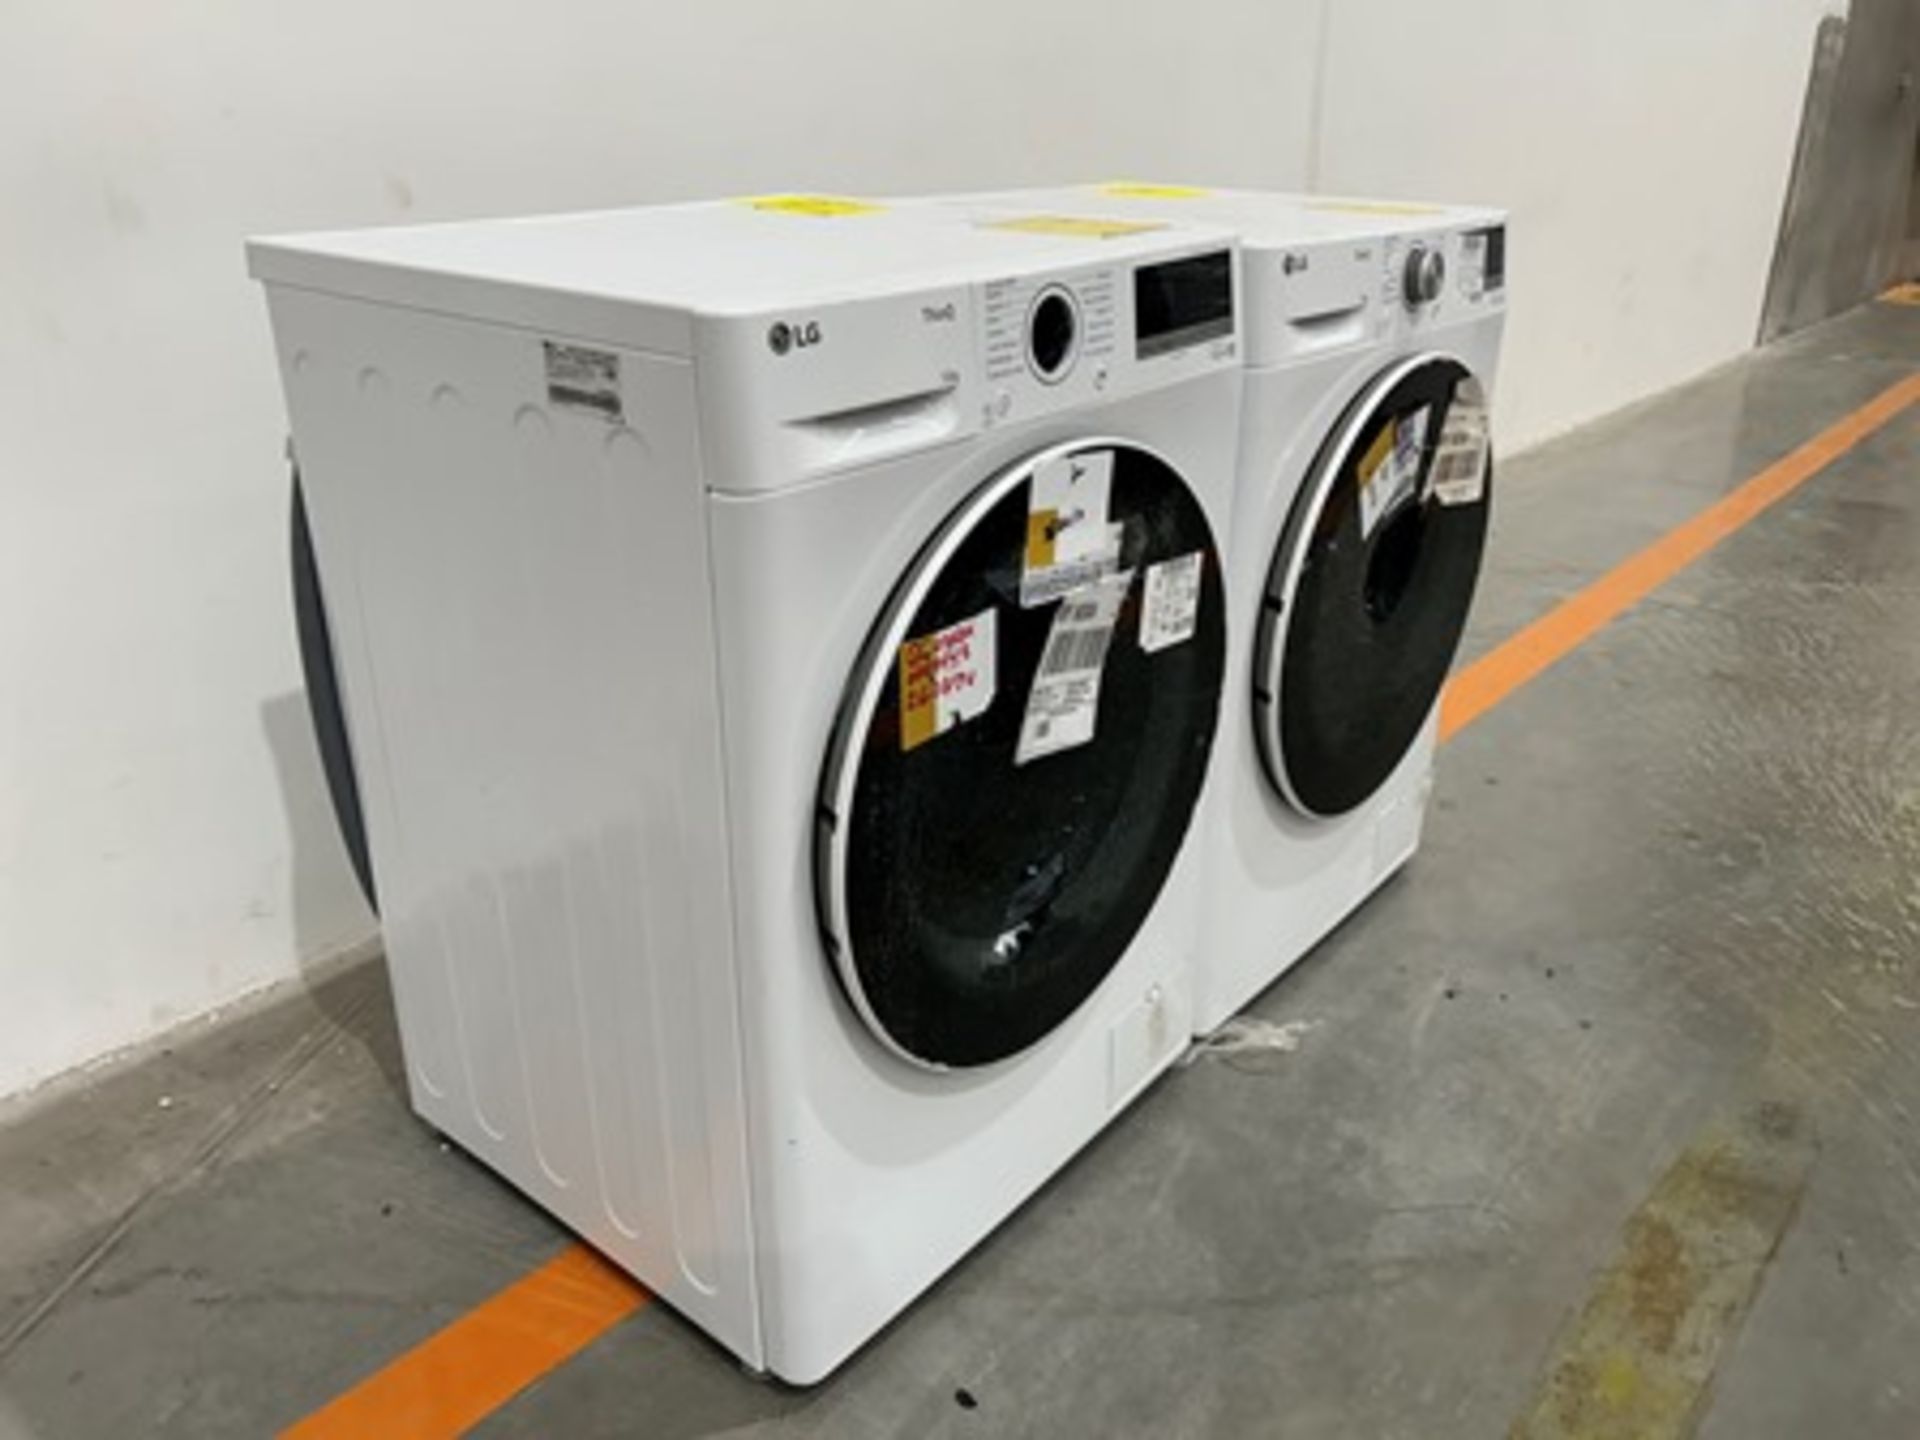 Lote de 2 lavadoras contiene: 1 Lavadora de 12 KG Marca LG, Modelo WM12WVC4S6, Serie 53846, Color B - Image 3 of 8